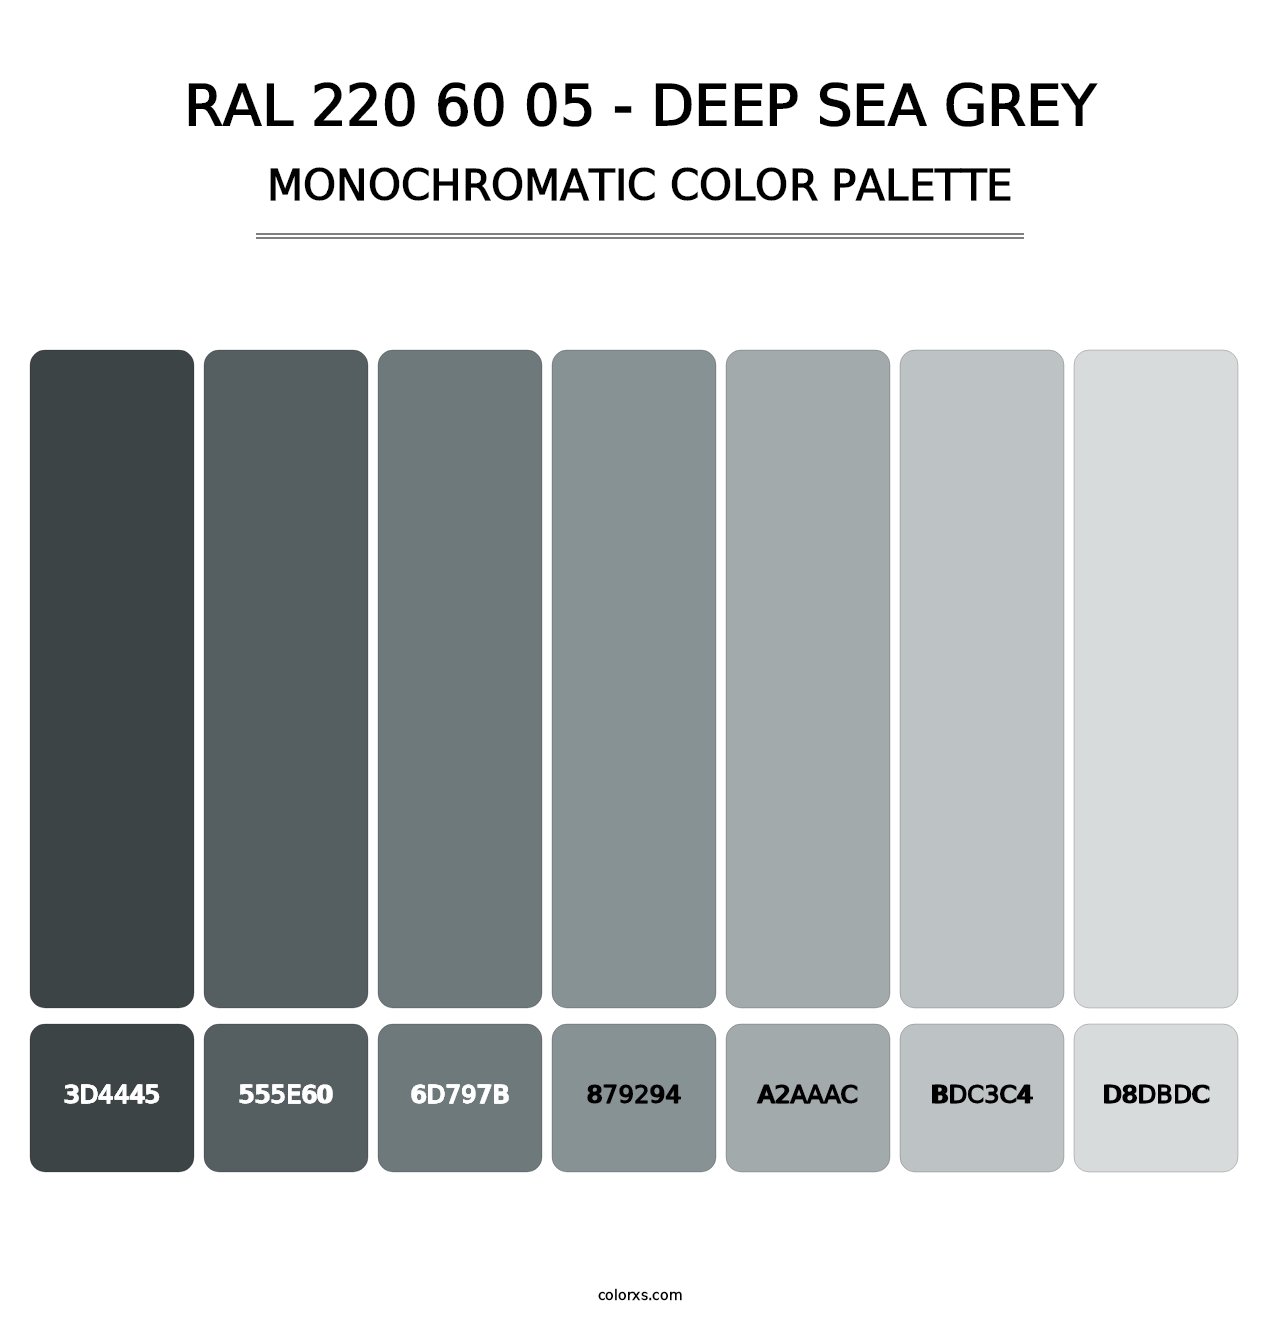 RAL 220 60 05 - Deep Sea Grey - Monochromatic Color Palette